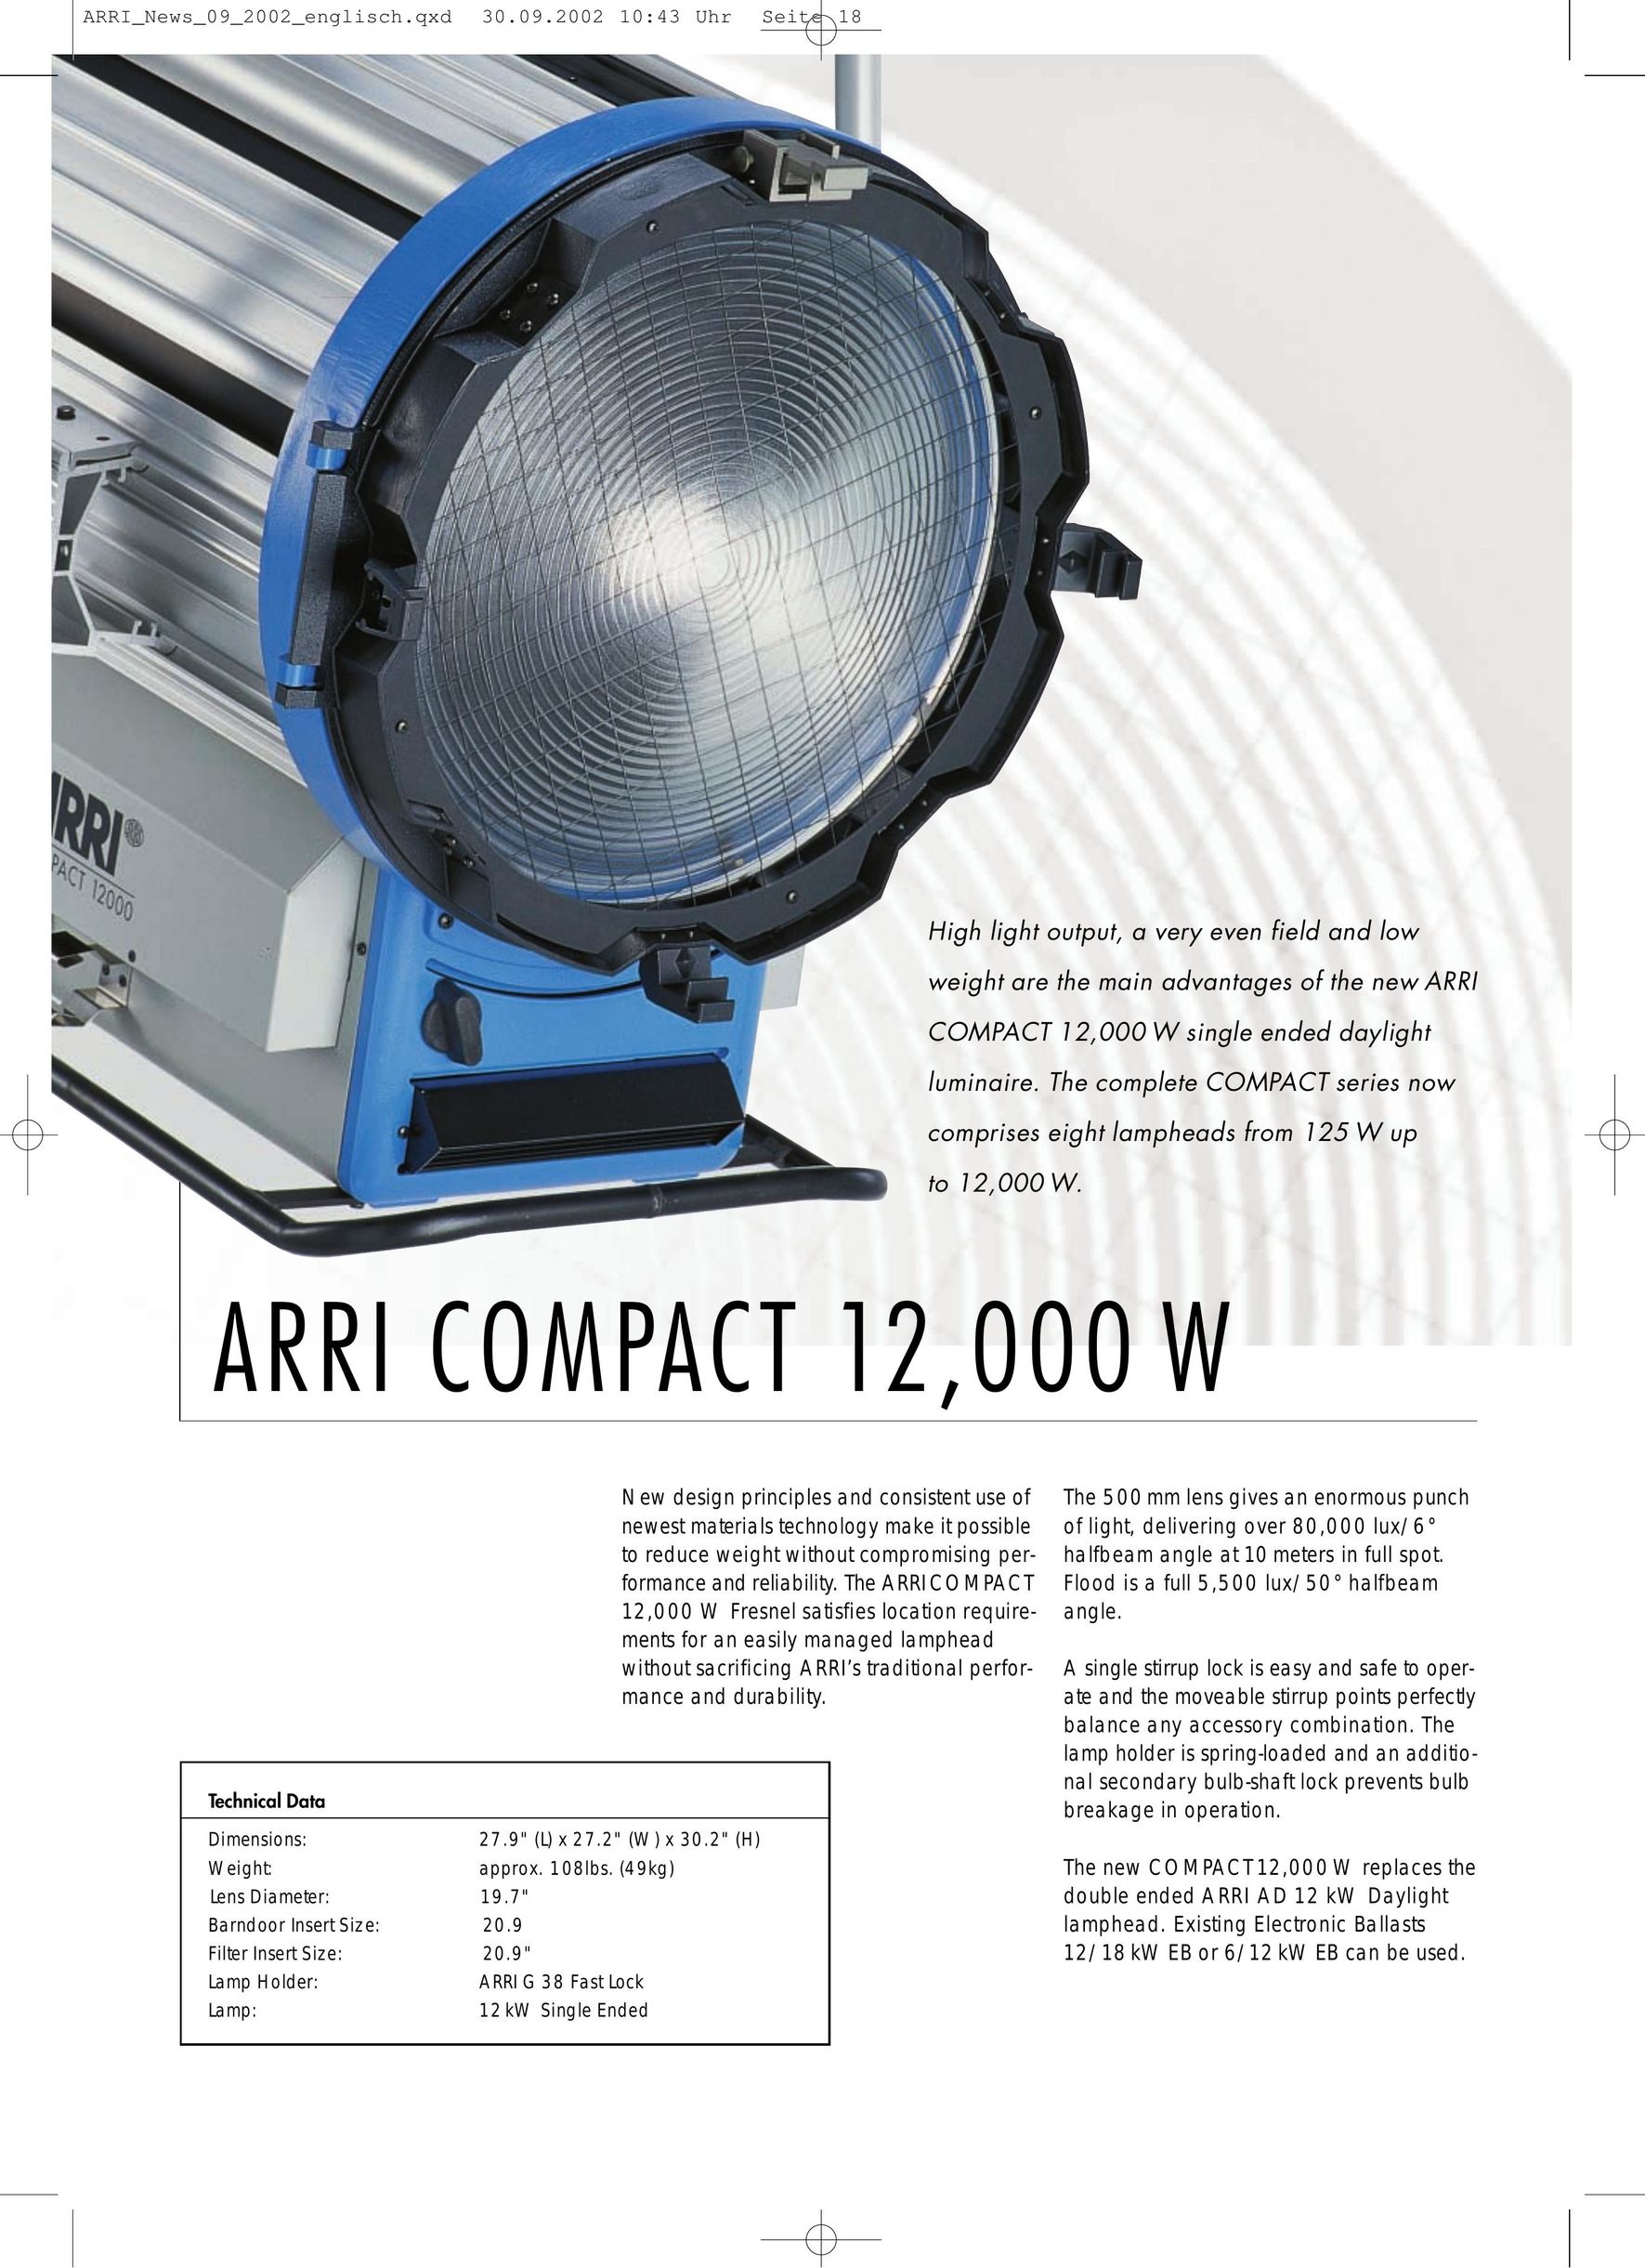 ARRI 12000 W Work Light User Manual